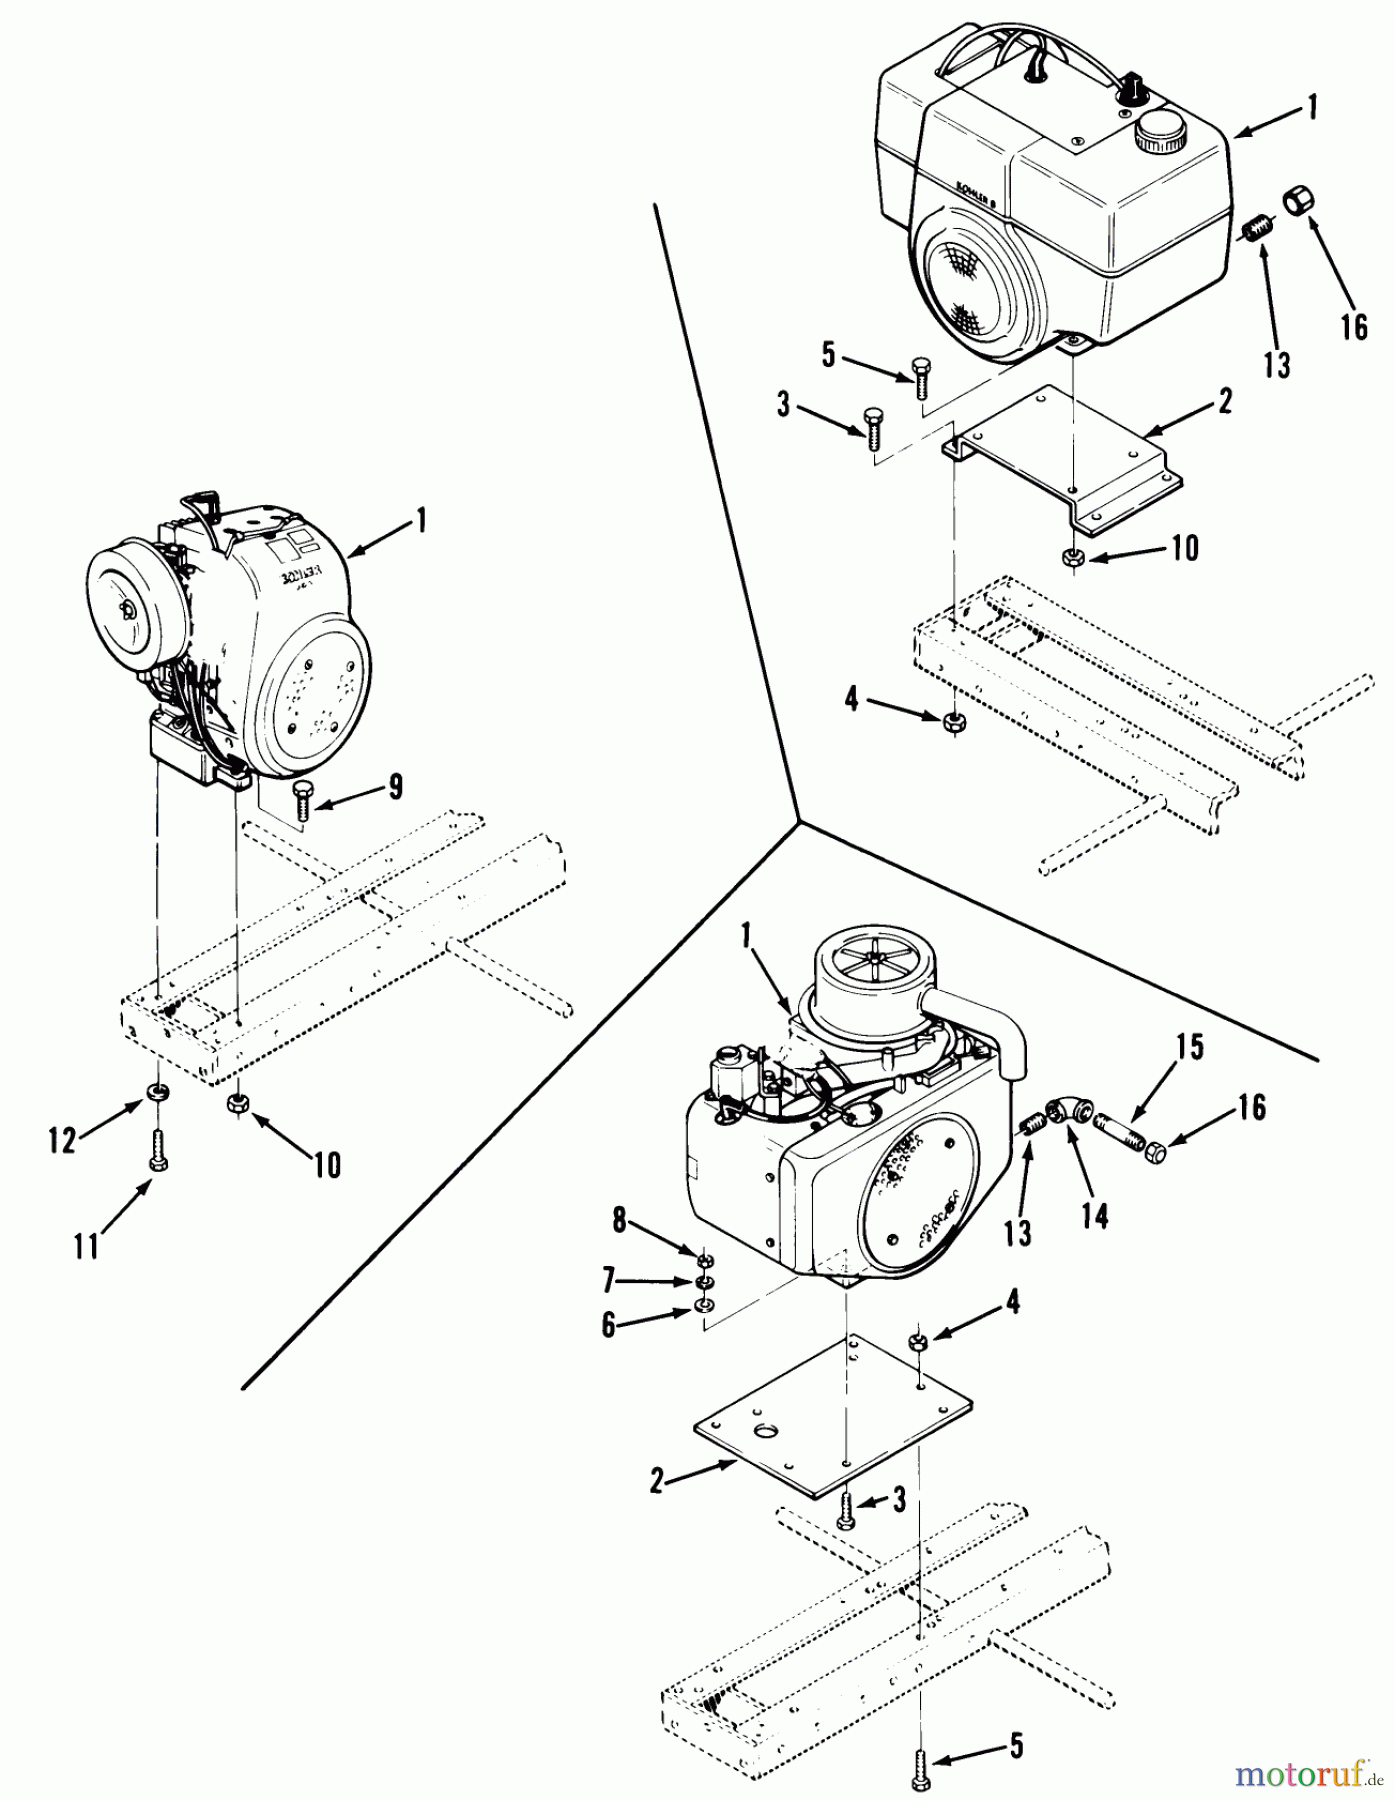  Toro Neu Mowers, Lawn & Garden Tractor Seite 1 31-18KE01 (418-A) - Toro 418-A Garden Tractor, 1987 ENGINES